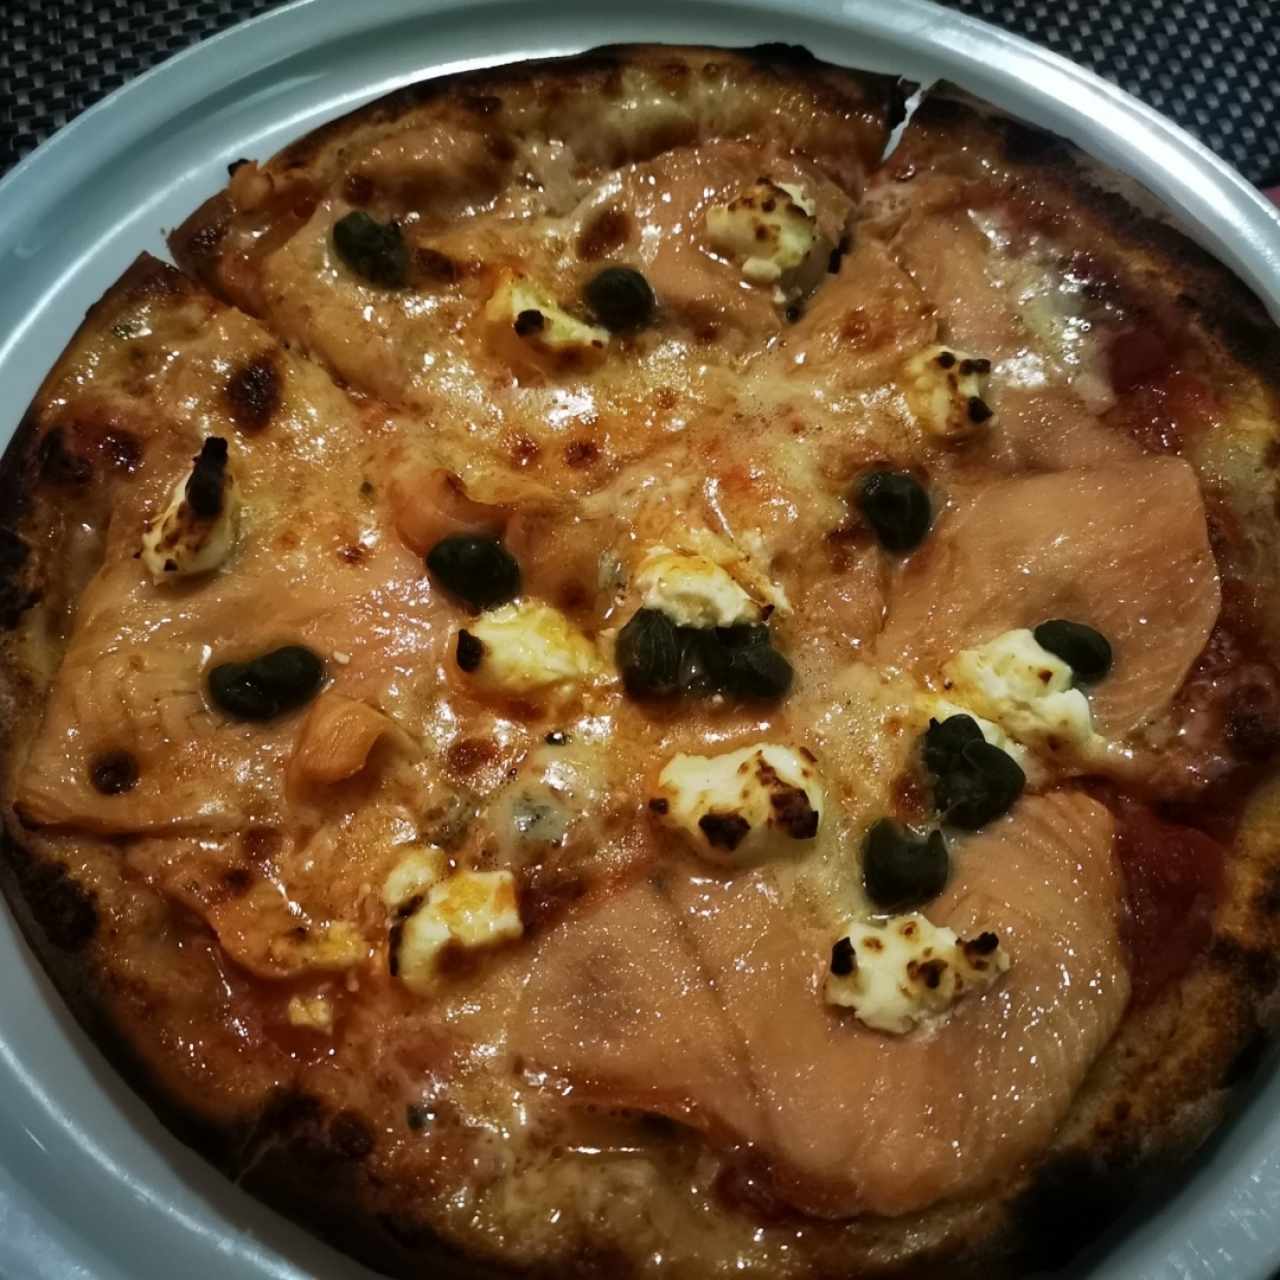 Pizzas Gourmet - Salmone